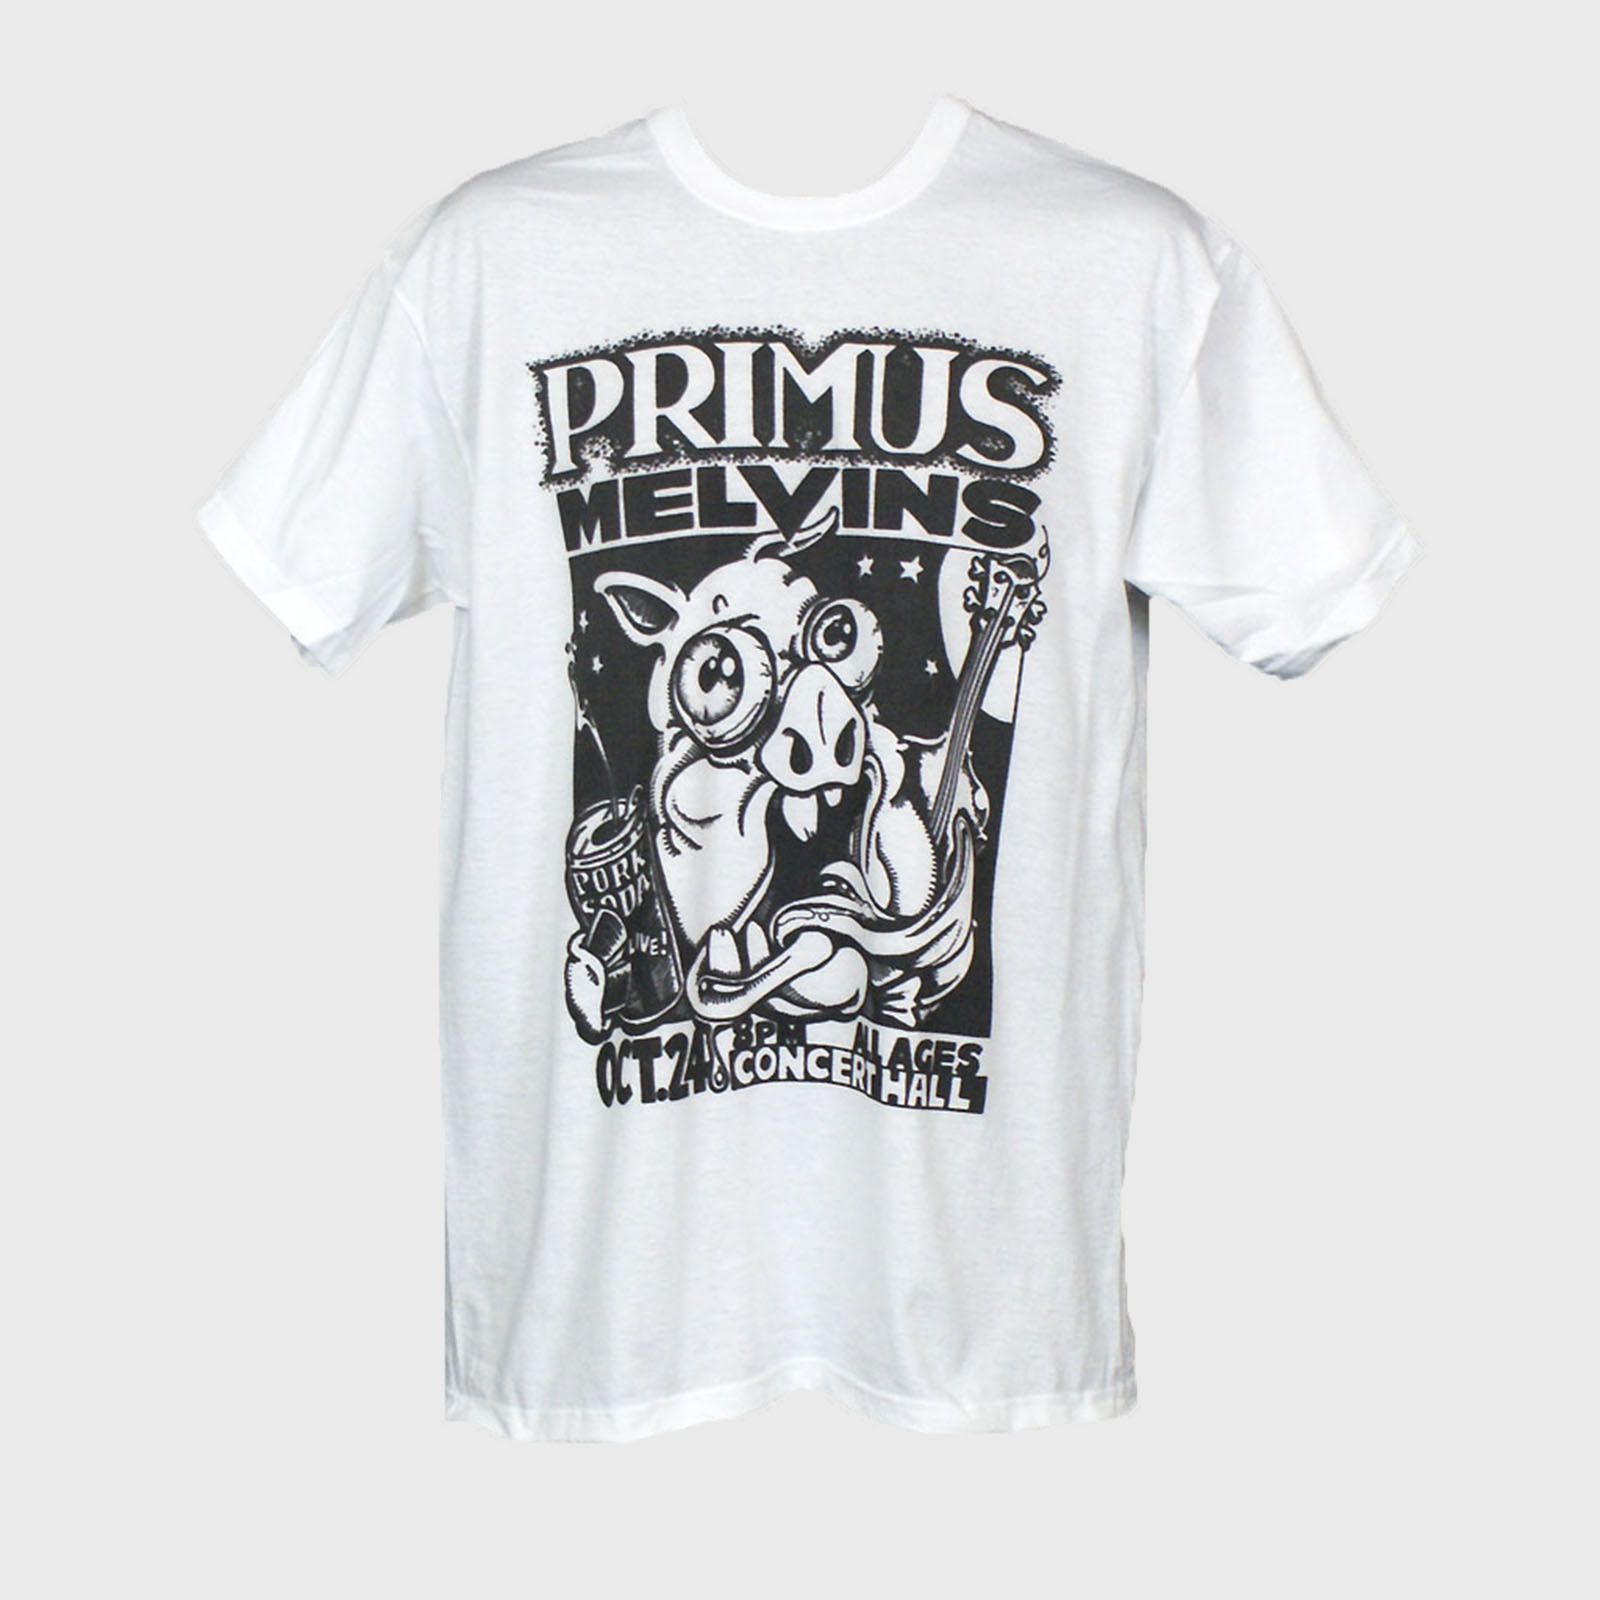 Grosshandel Primus Melvins Metall Punk Rock T Shirt Mudhoney